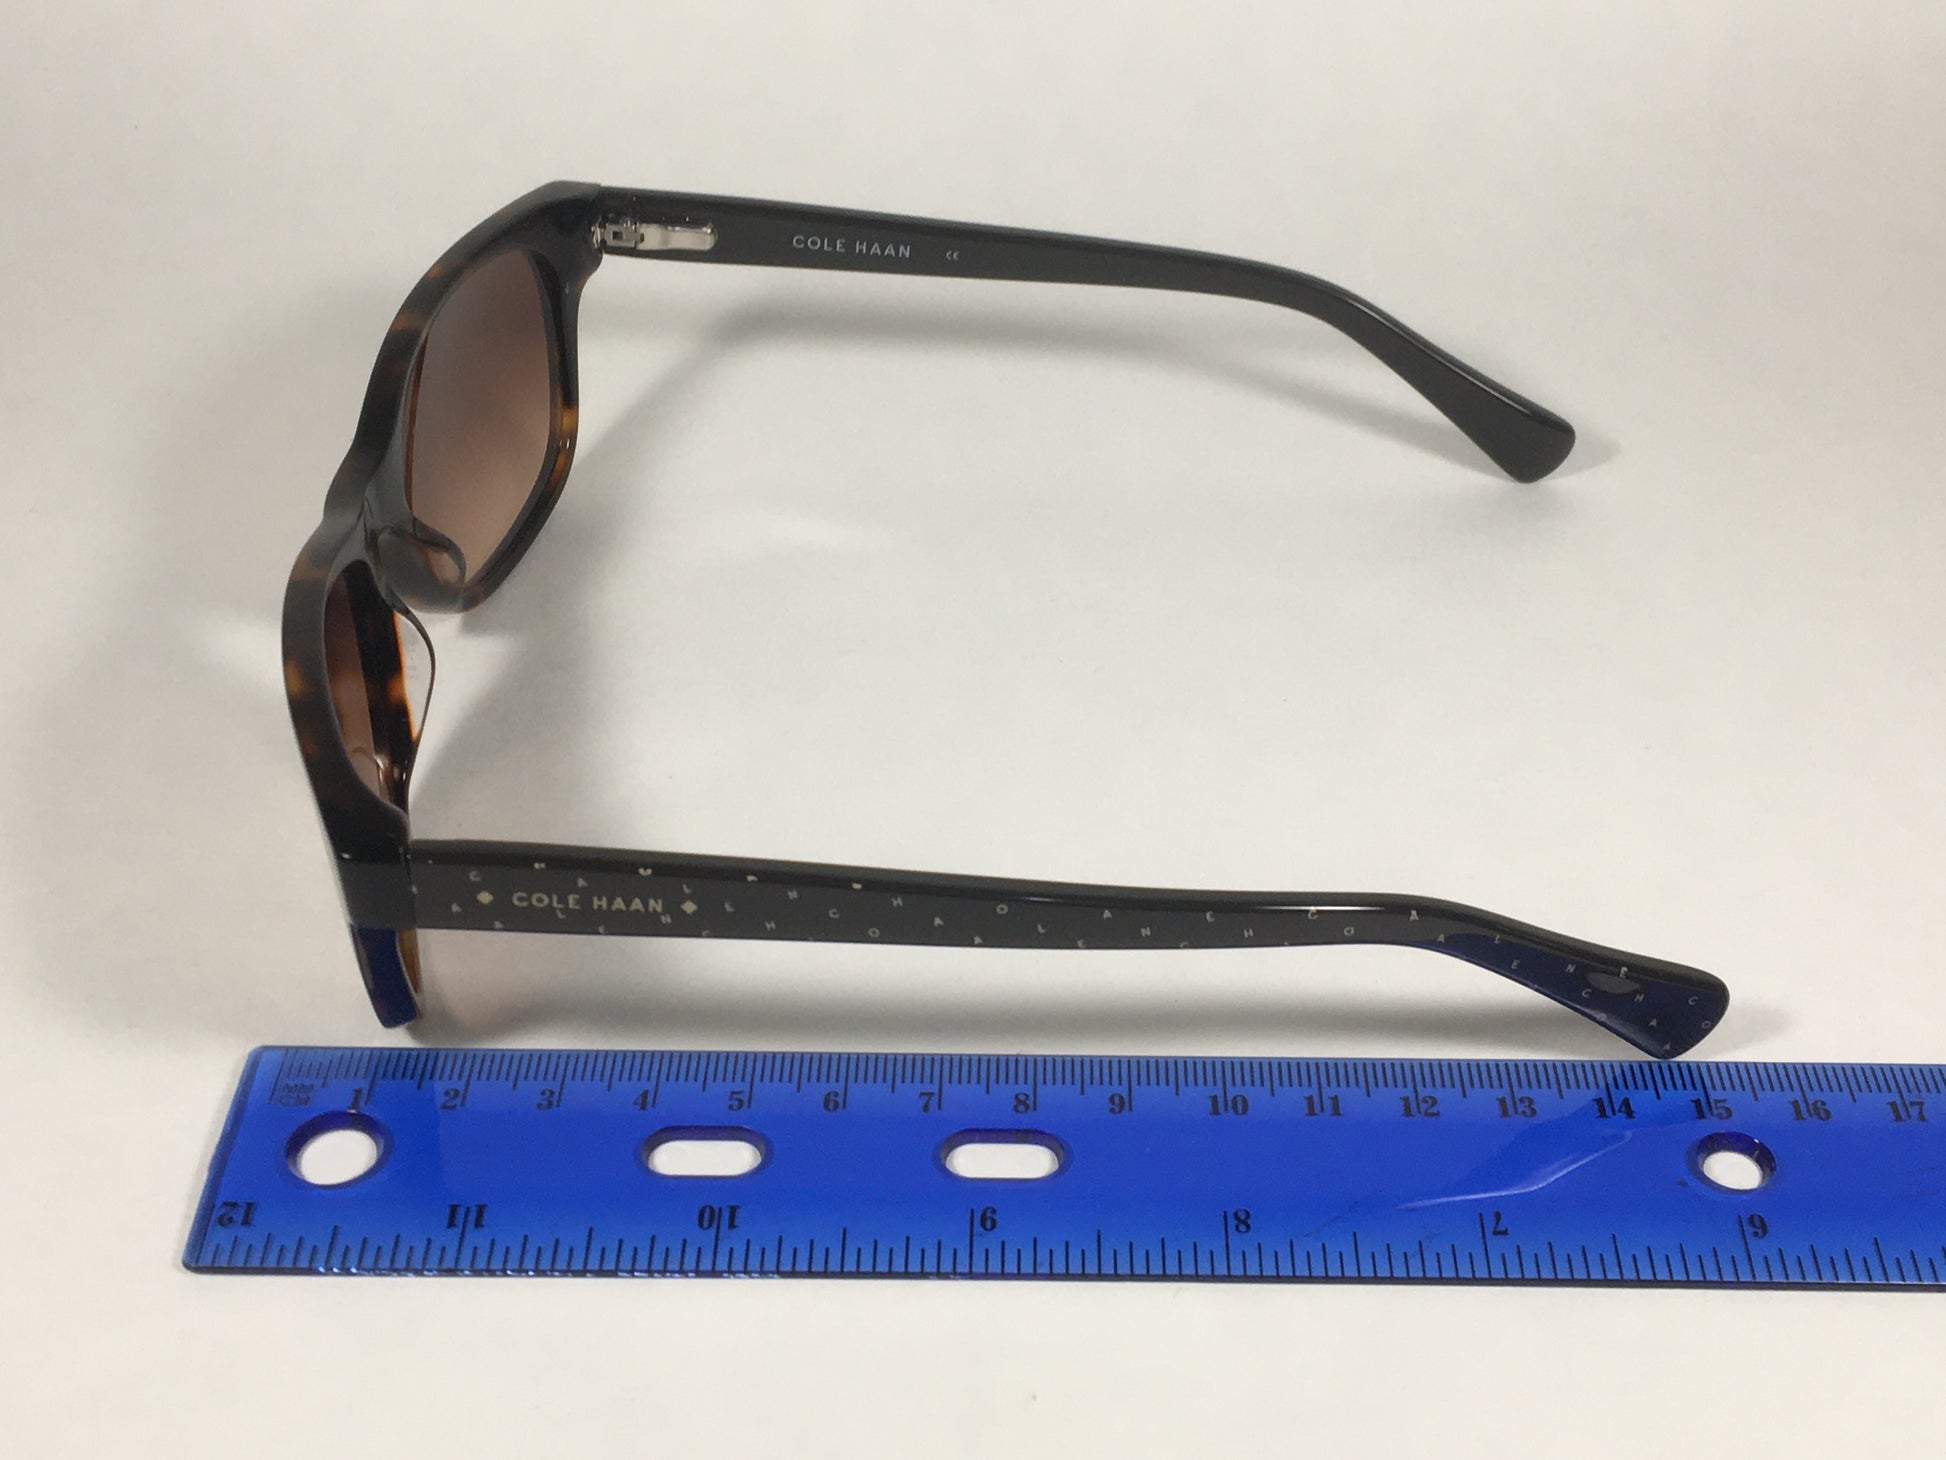 Cole Haan Designer Sunglasses Brown Tortoise Brown Gradient Lens CH7011 240 SOFT TORTOISE - Sunglasses